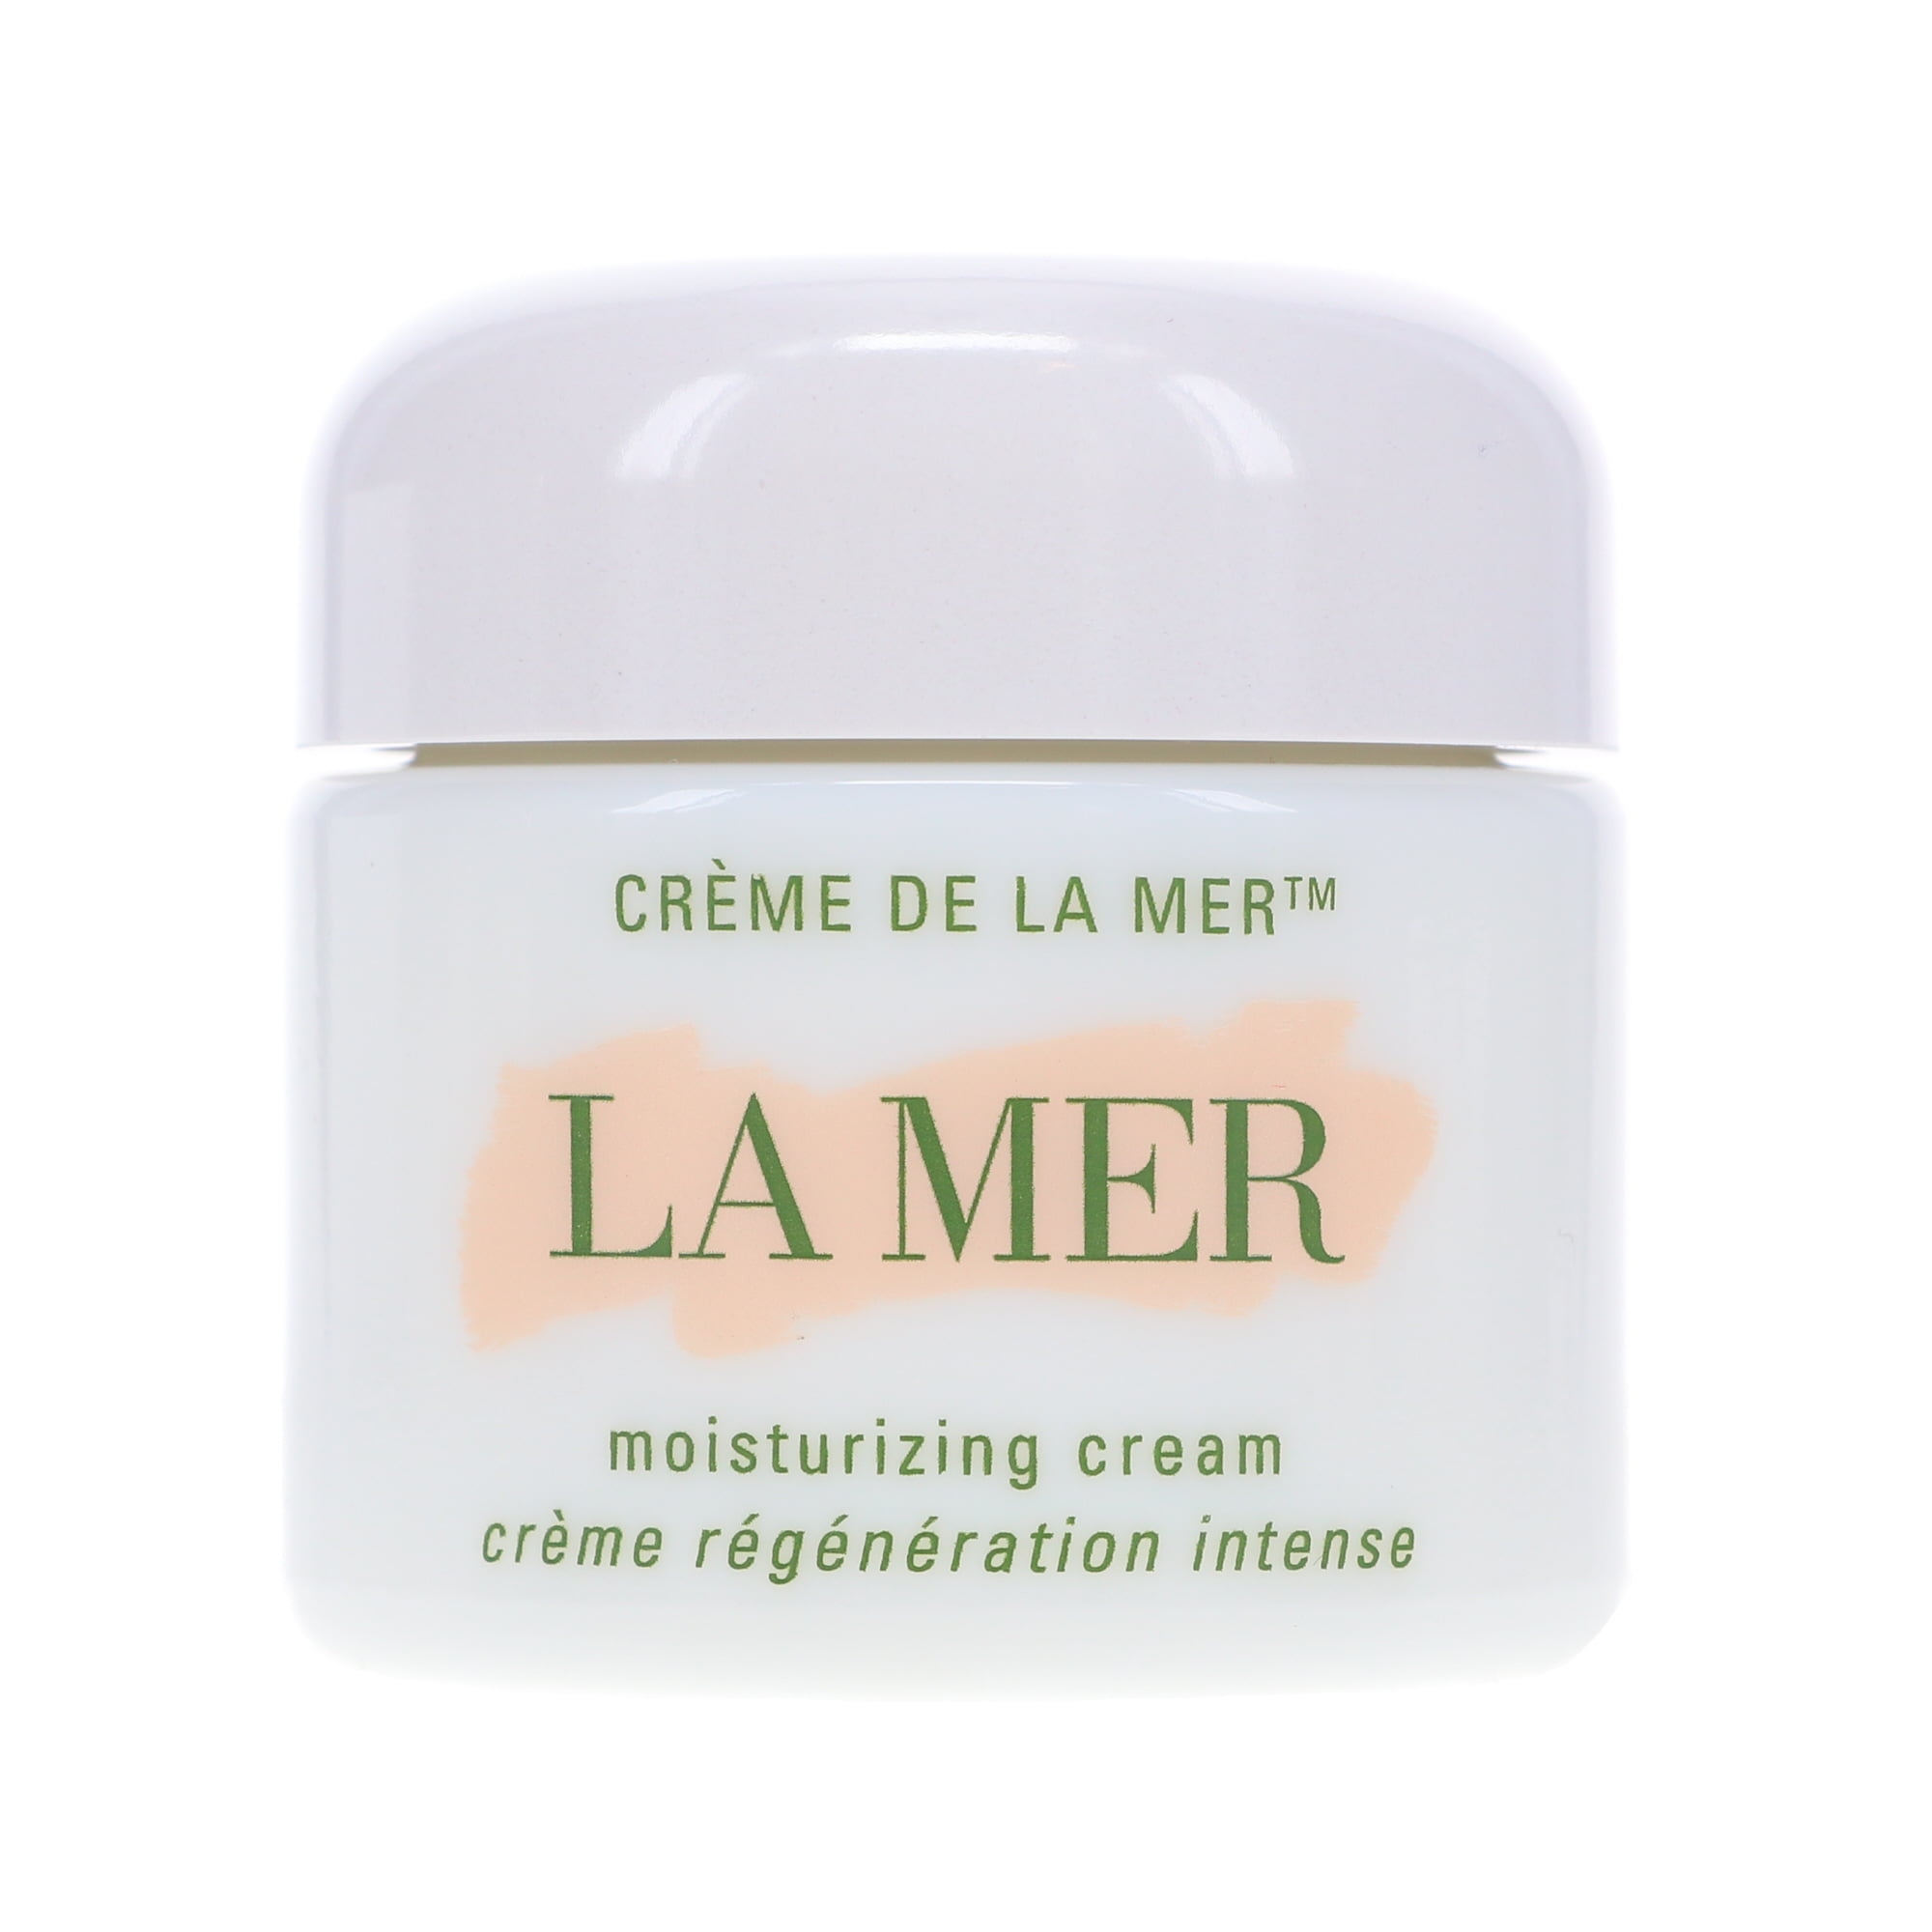 La Mer The Moisturizing Cream 2 oz - image 1 of 8